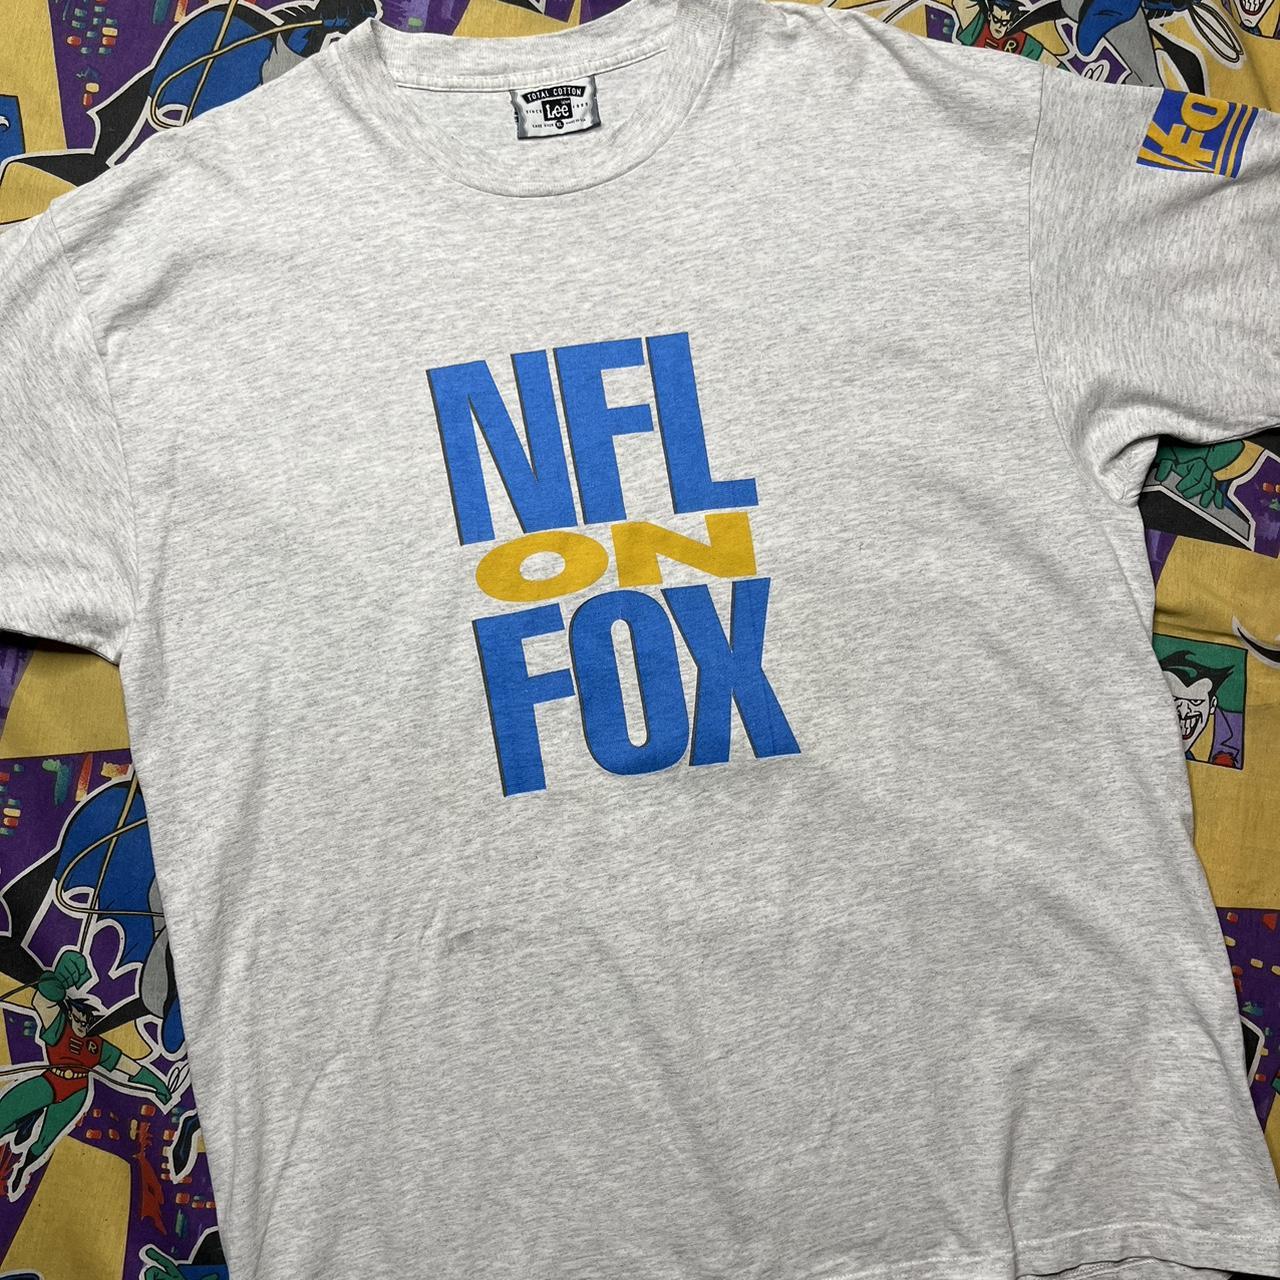 Vintage NFL on FOX t shirt 